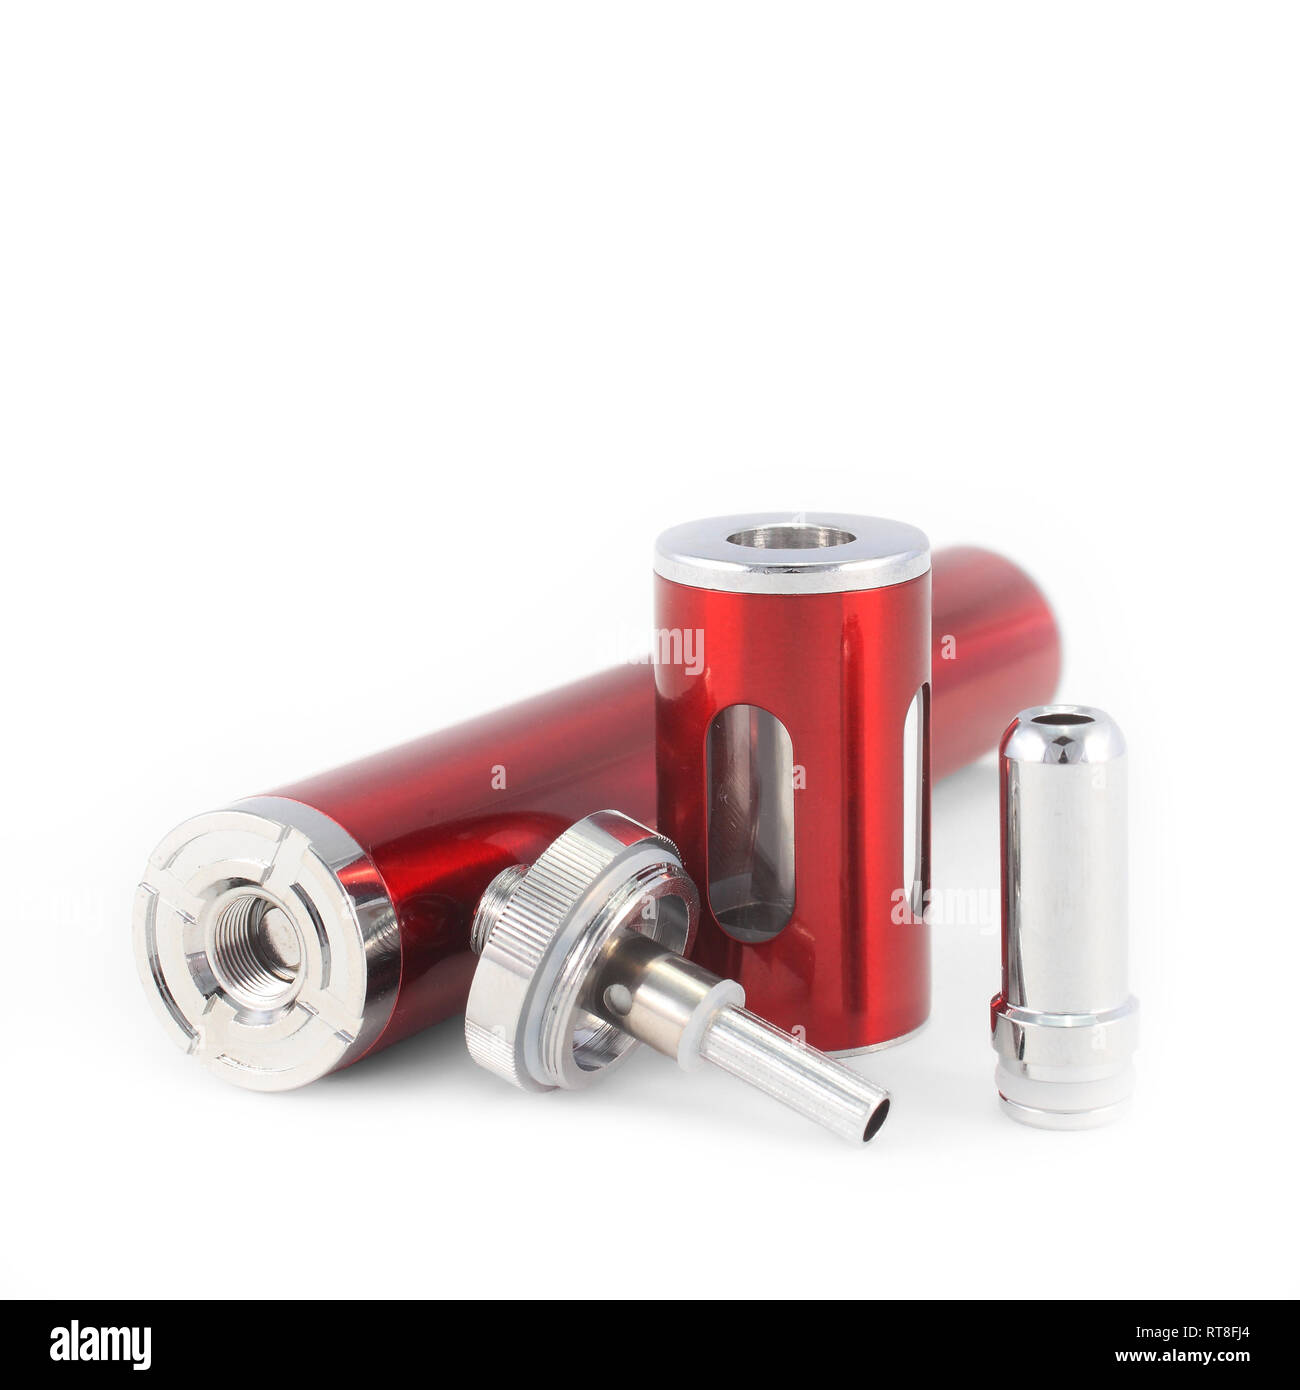 Items of an e-cigarette Stock Photo